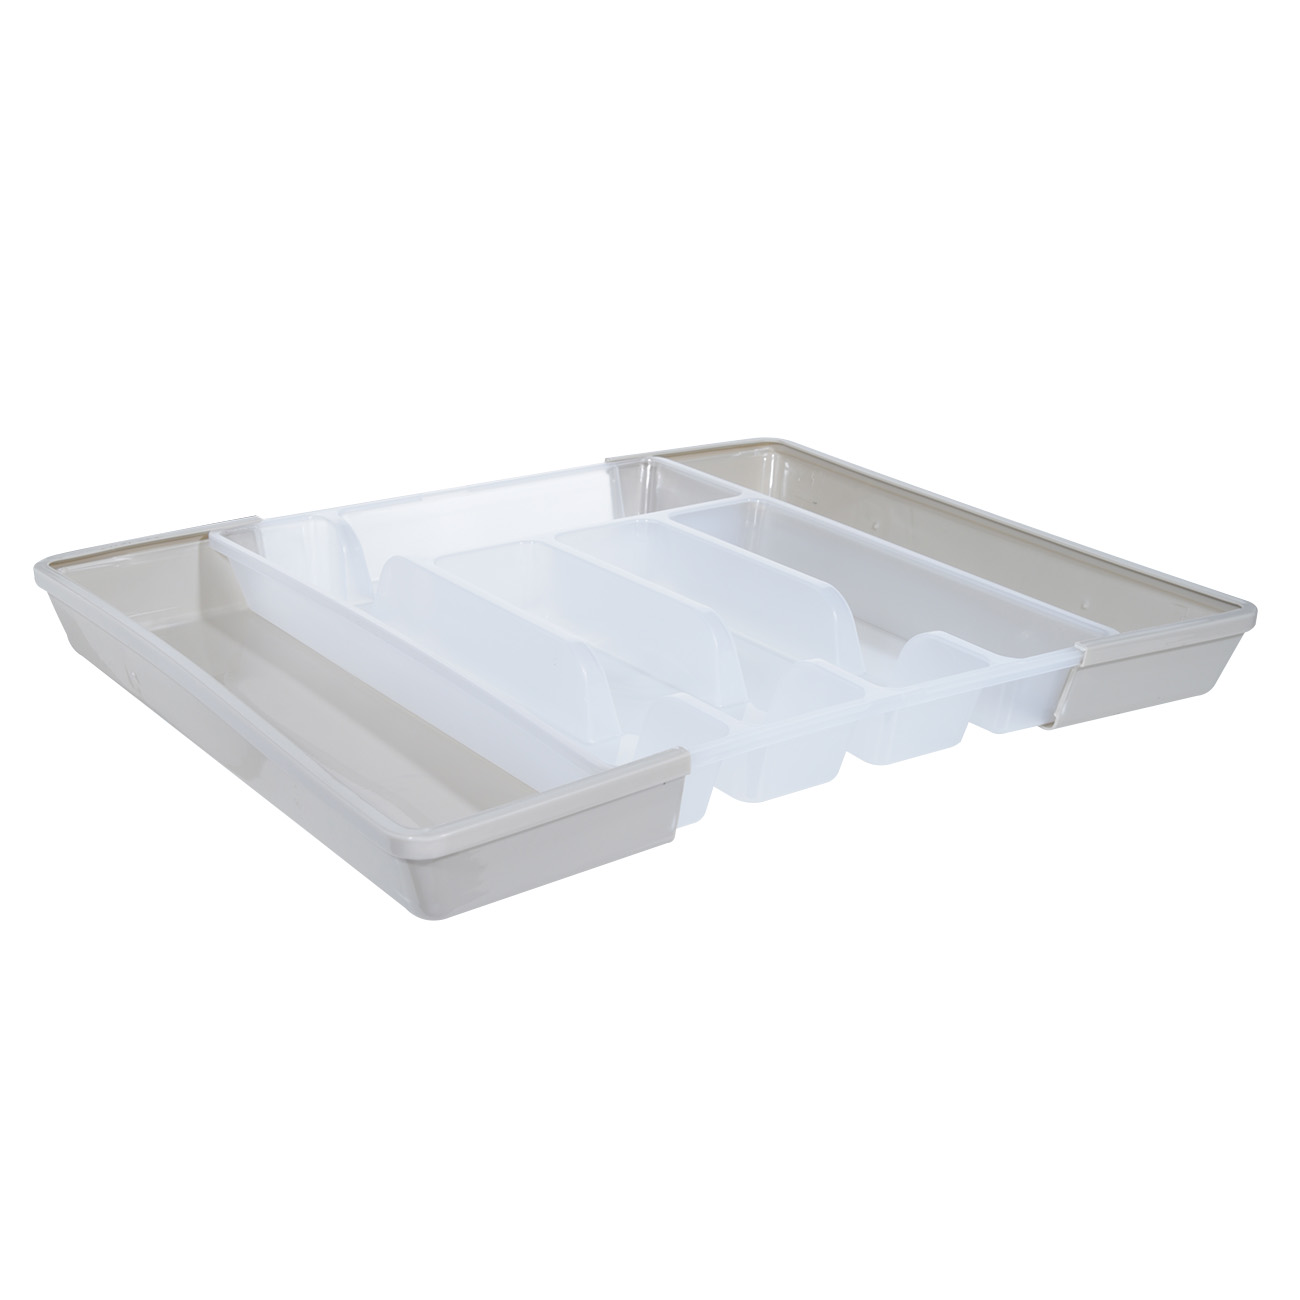 Cutlery tray, 37x27 cm, 7 units, sliding, plastic, white-gray, Keeping изображение № 2